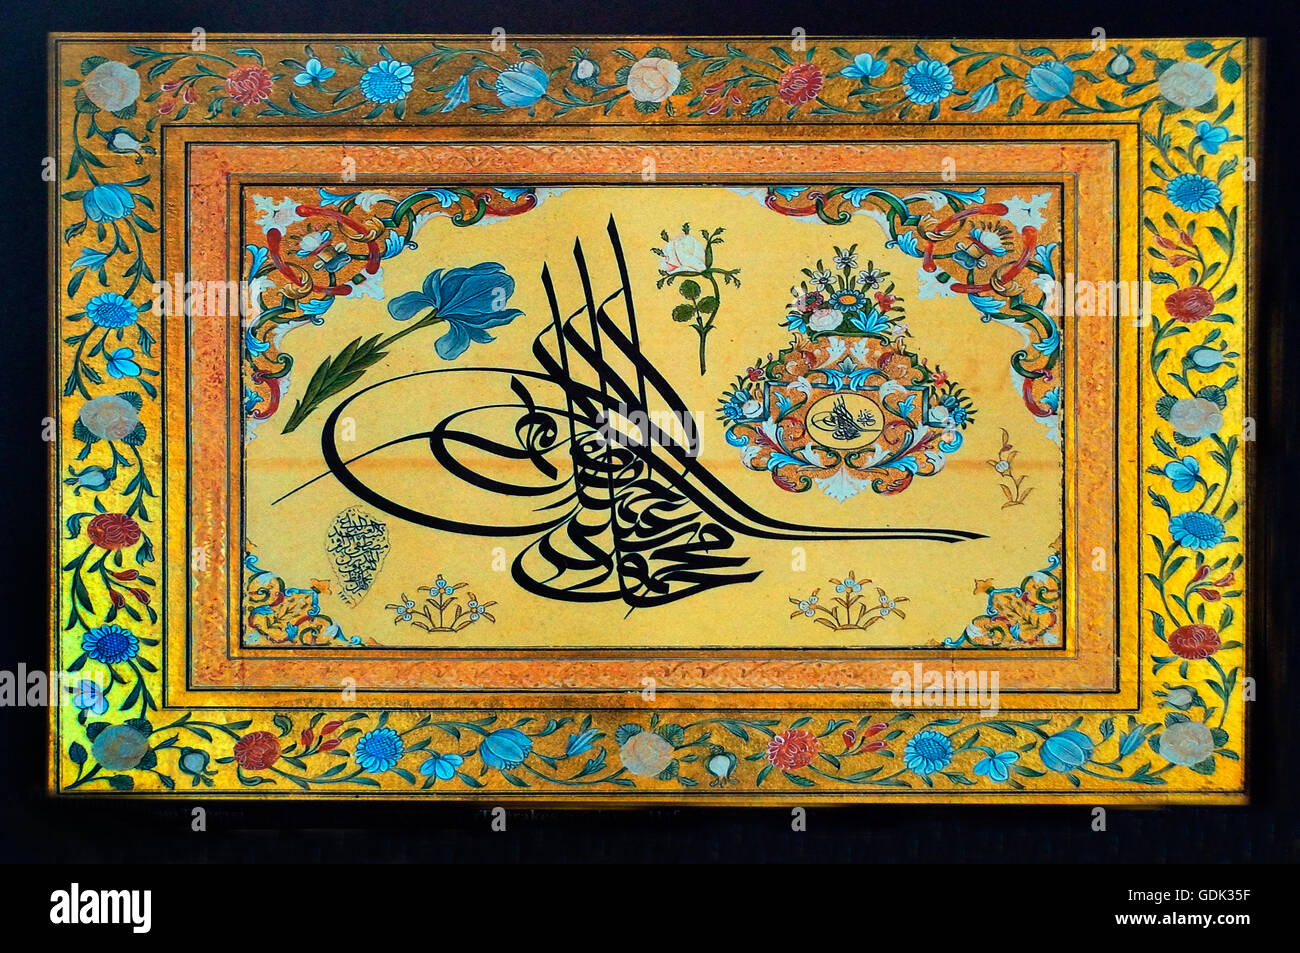 3D Tughra - Imperial calligraphic monogram, seal or signature of a sultan.  Stock Illustration